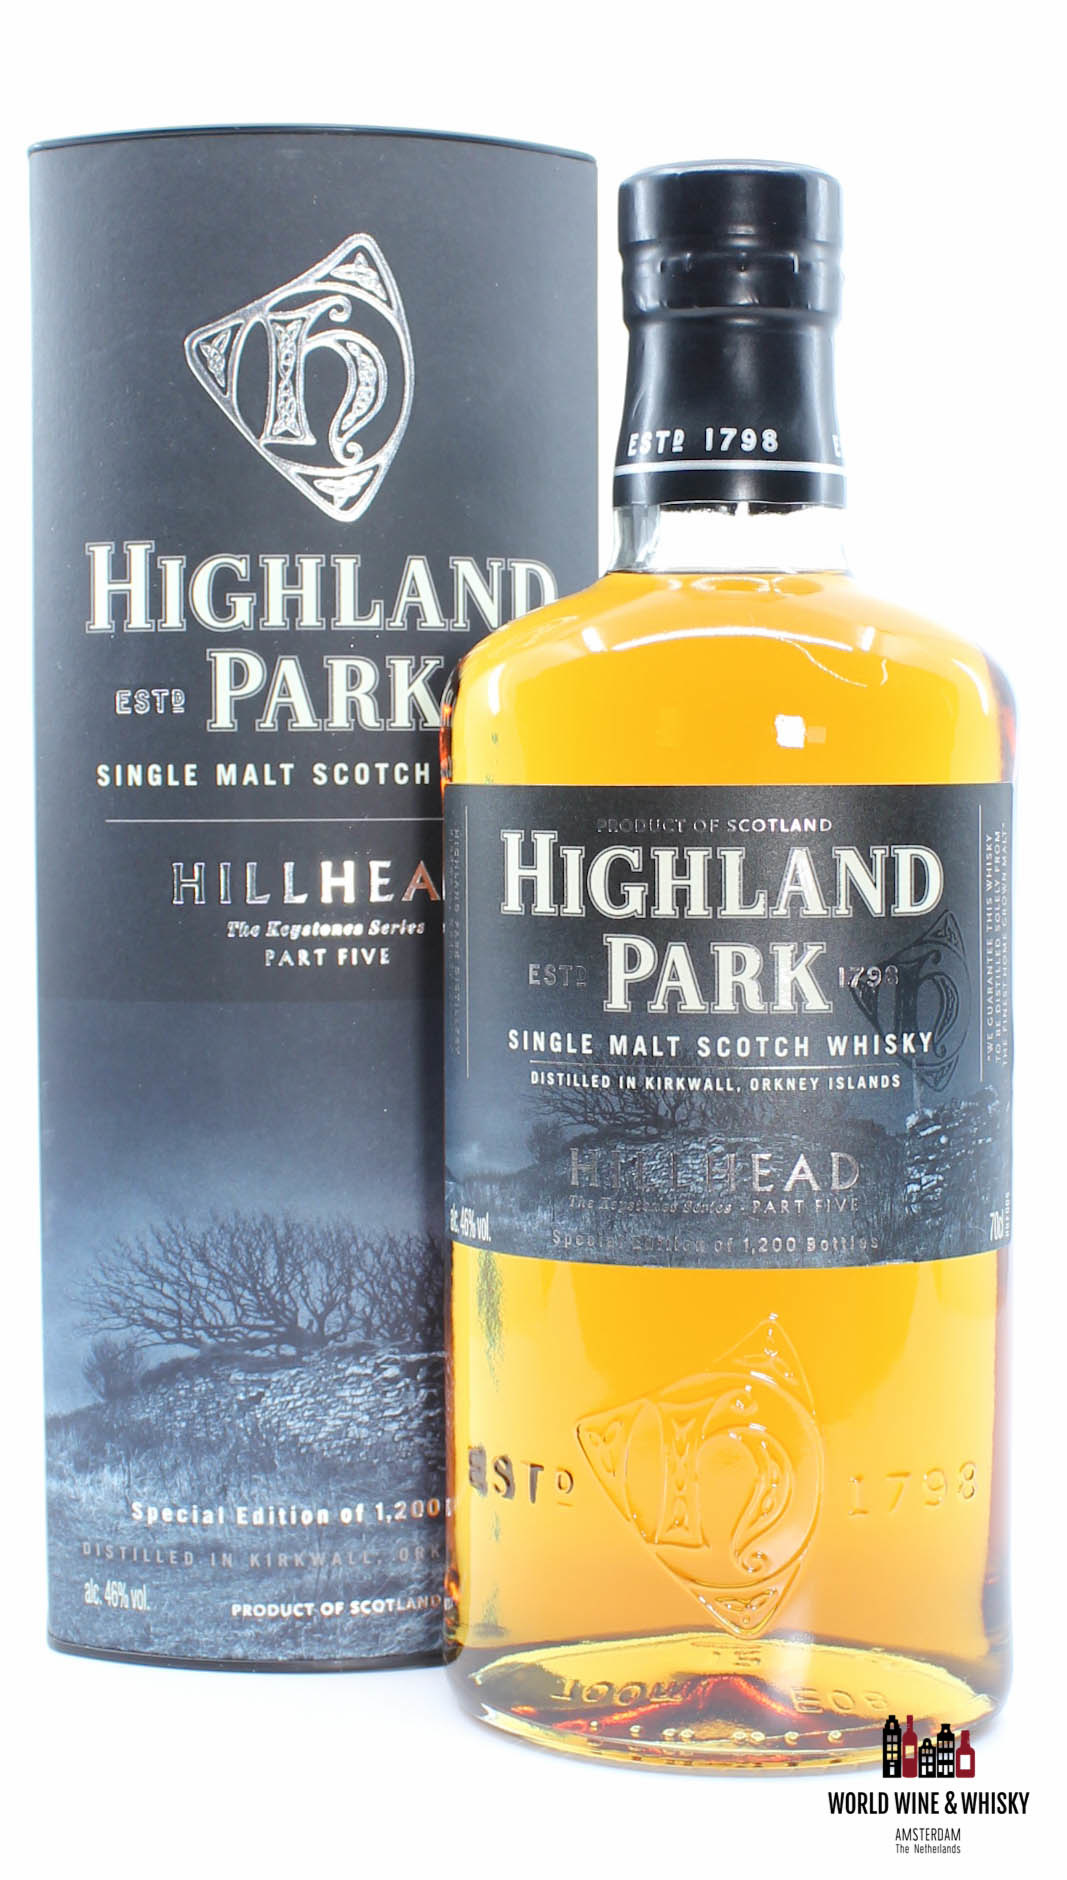 Highland Park Highland Park Keystones Series - Hobbister, Shiel, Quercus, Yesnaby & Hillhead (full set)